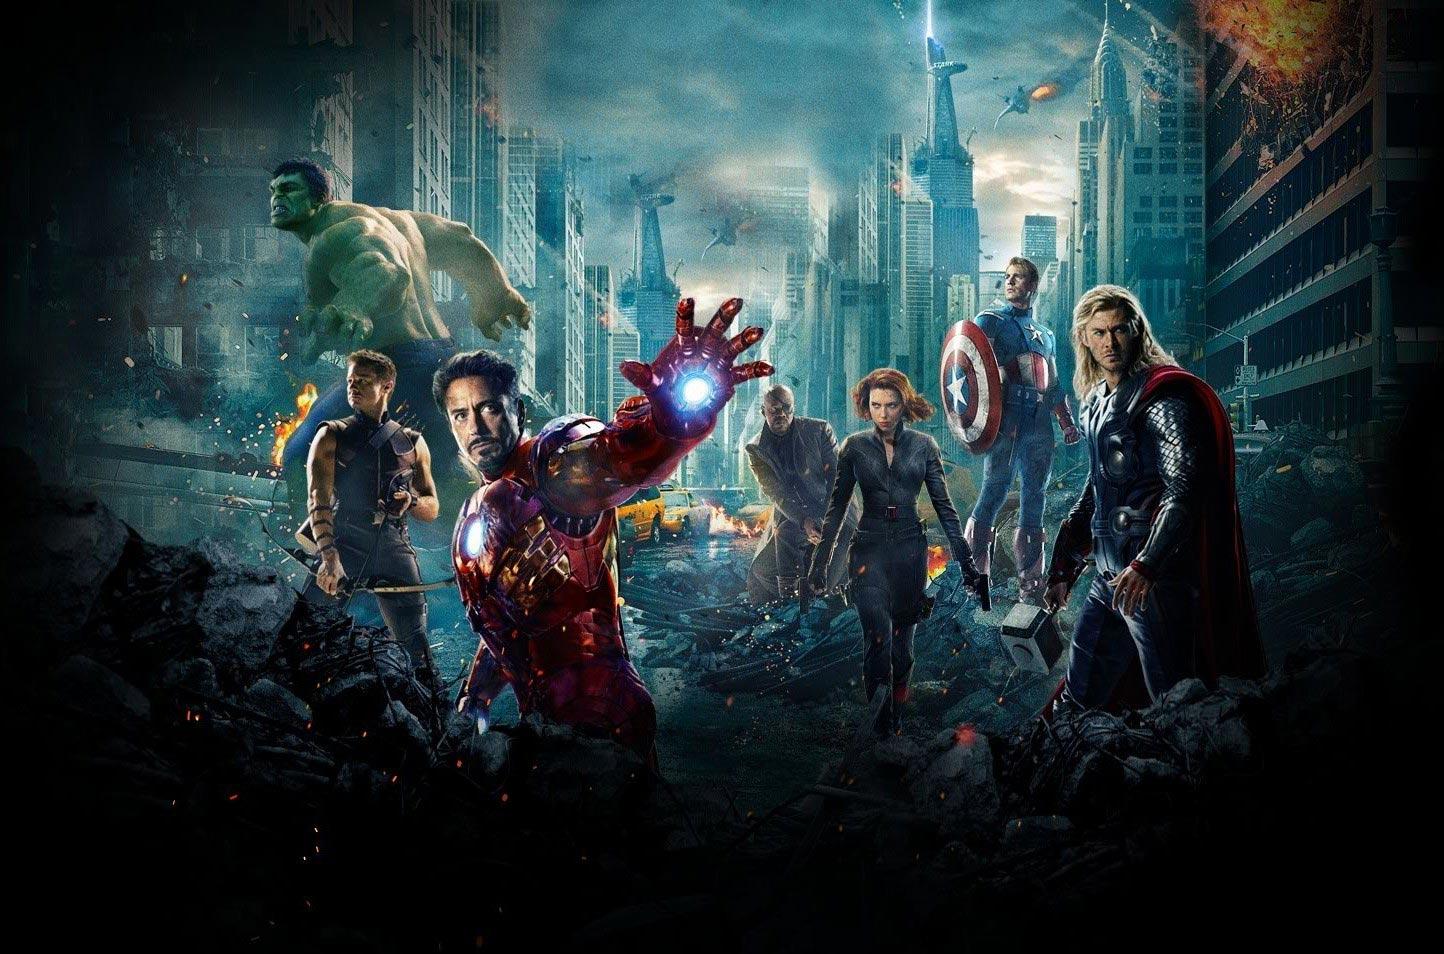 The Avengers group shot